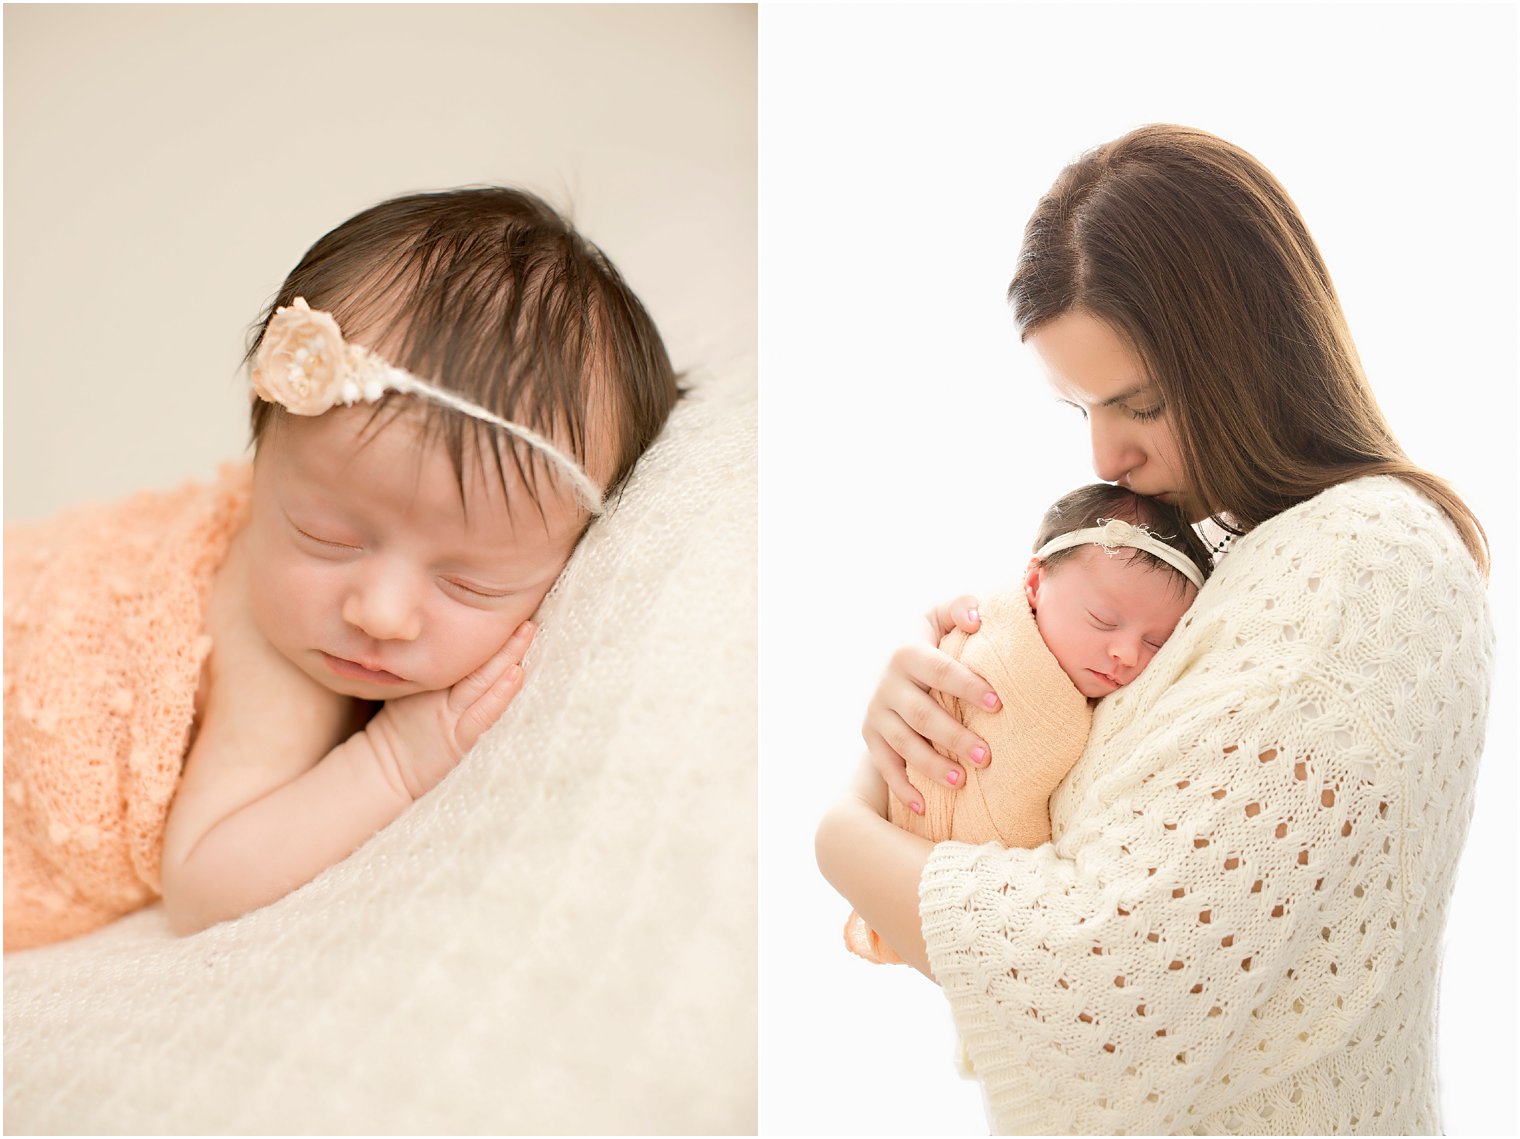 Sweet newborn photos with mother | Photo by Idalia Photography